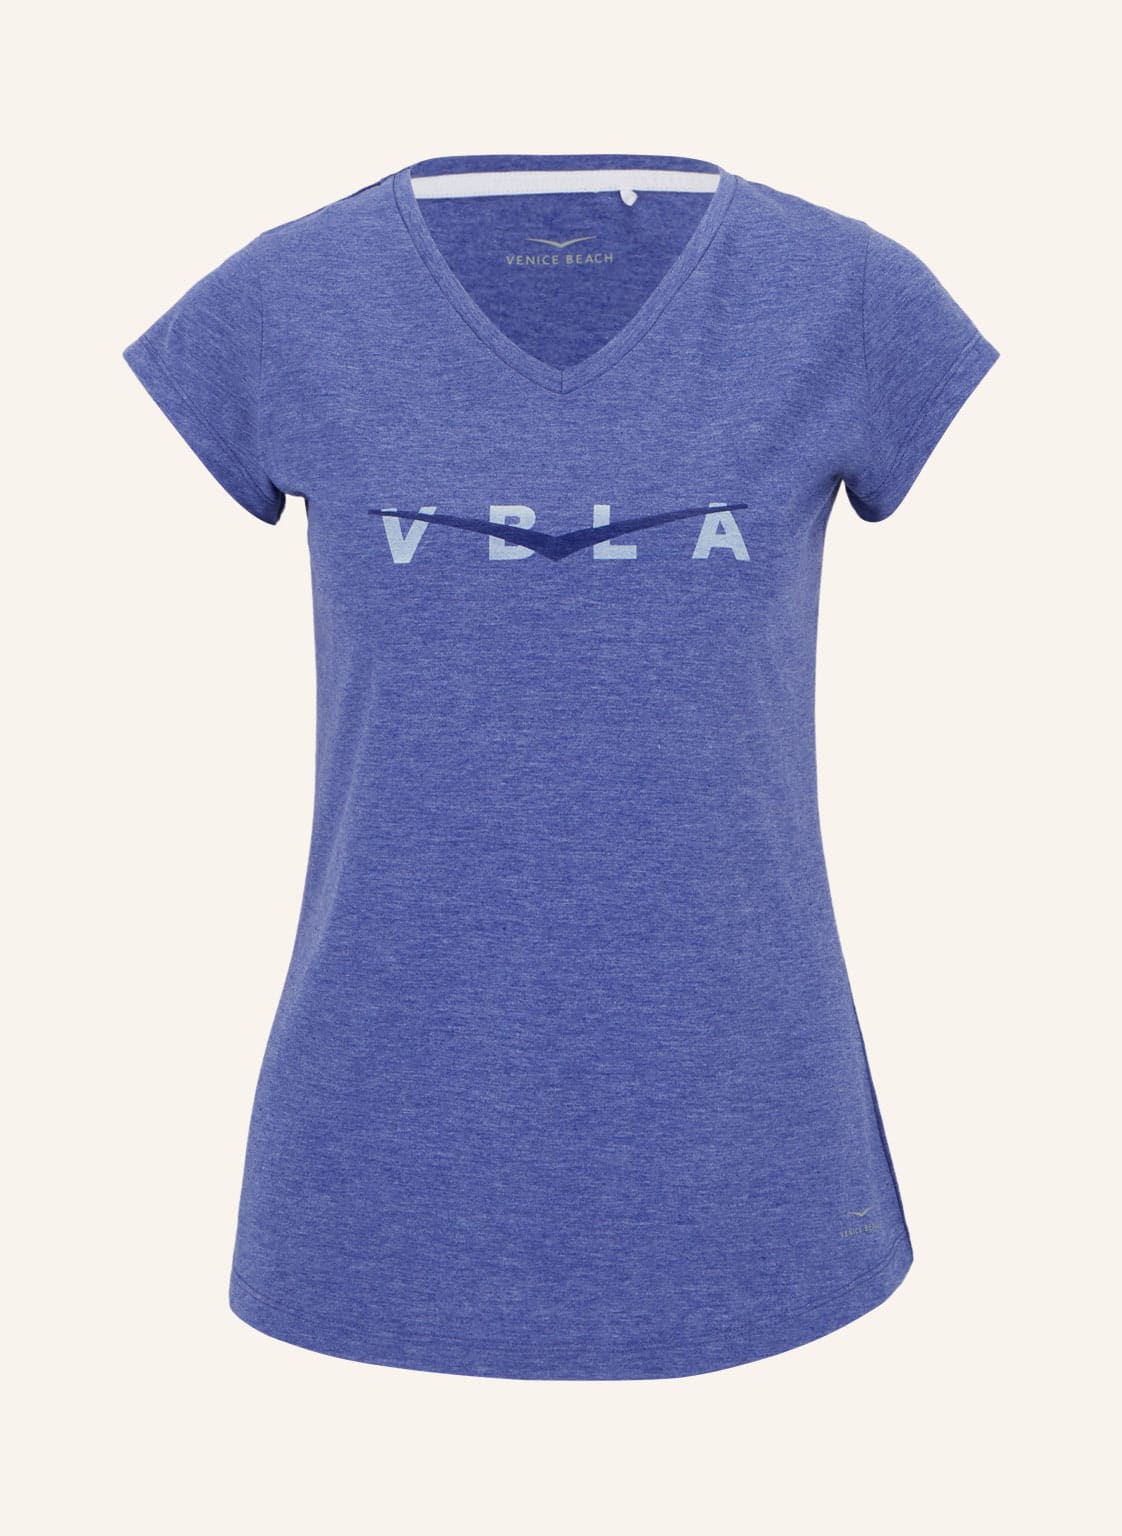 Venice Beach V-Neck Shirt Vb Alisja blau von VENICE BEACH